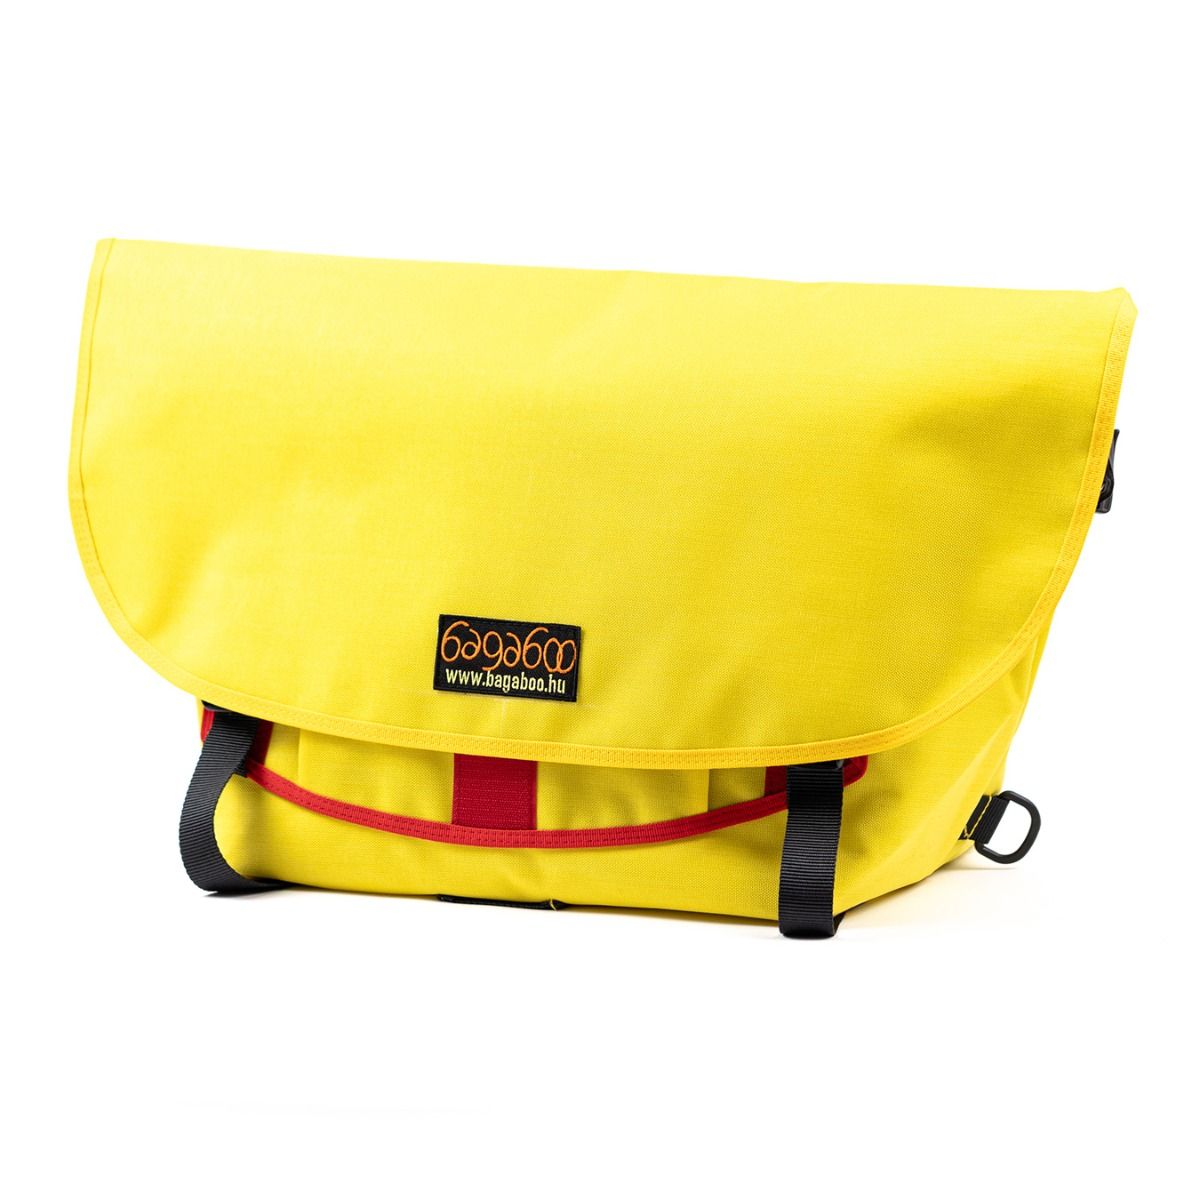 BAGABOO standard messenger bag Lサイズ 送料無料/新品 - バッグ